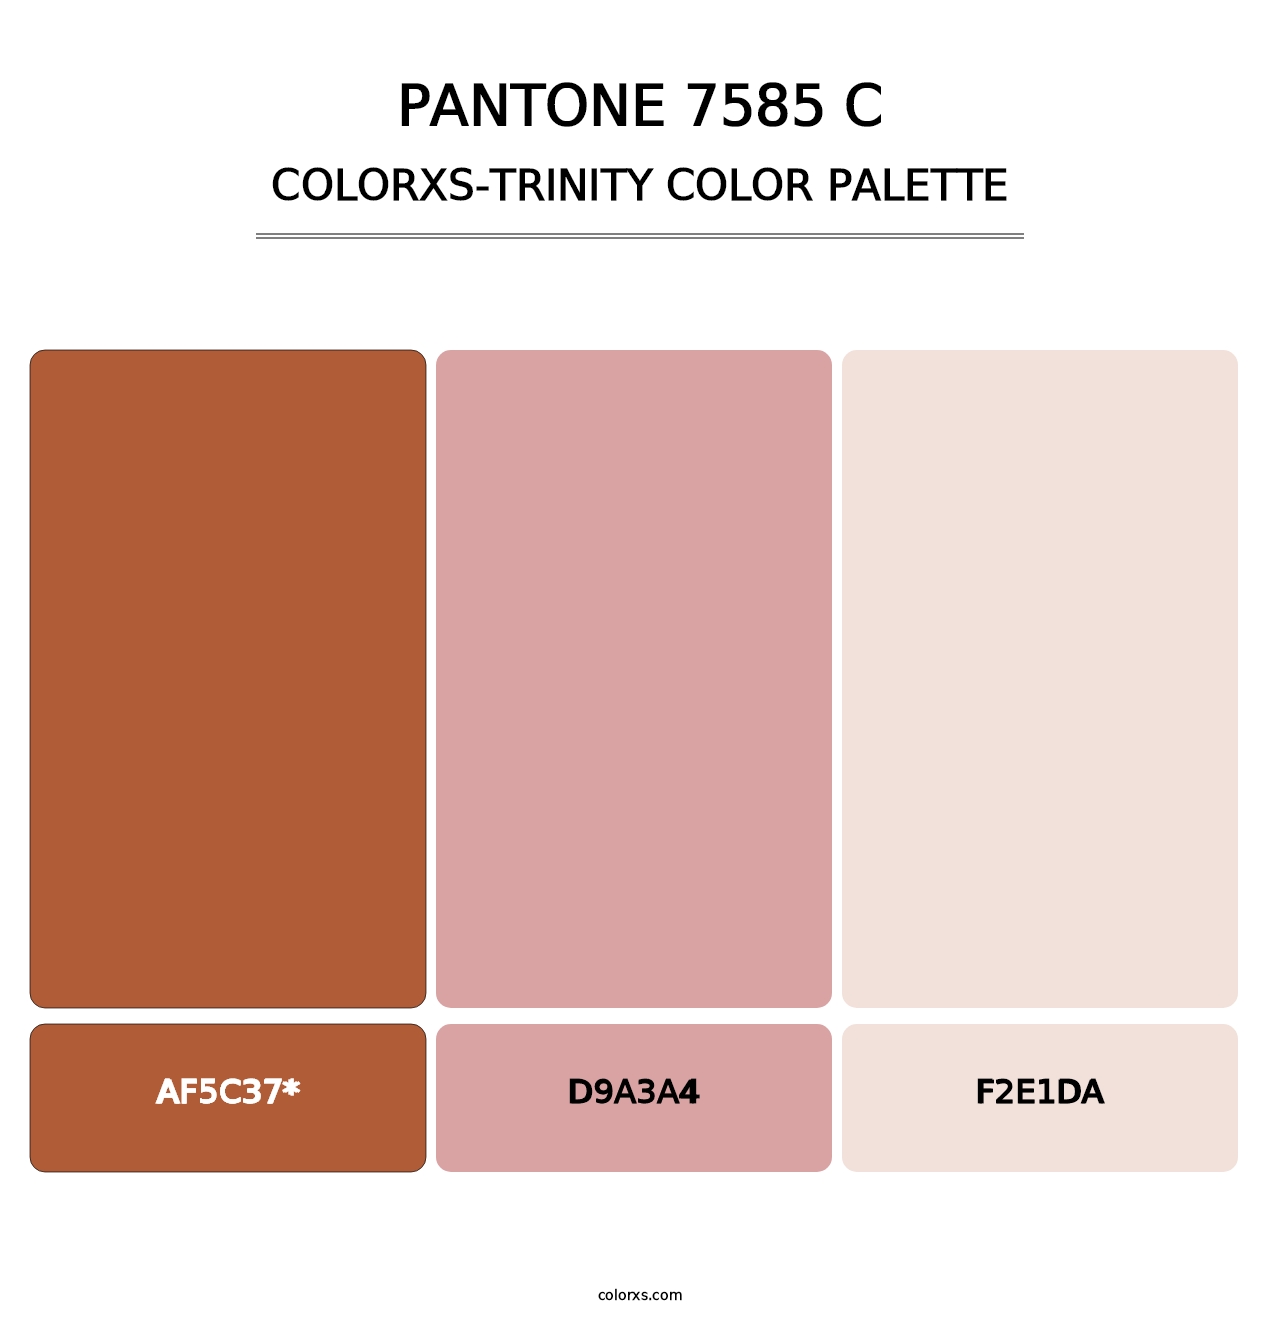 PANTONE 7585 C - Colorxs Trinity Palette